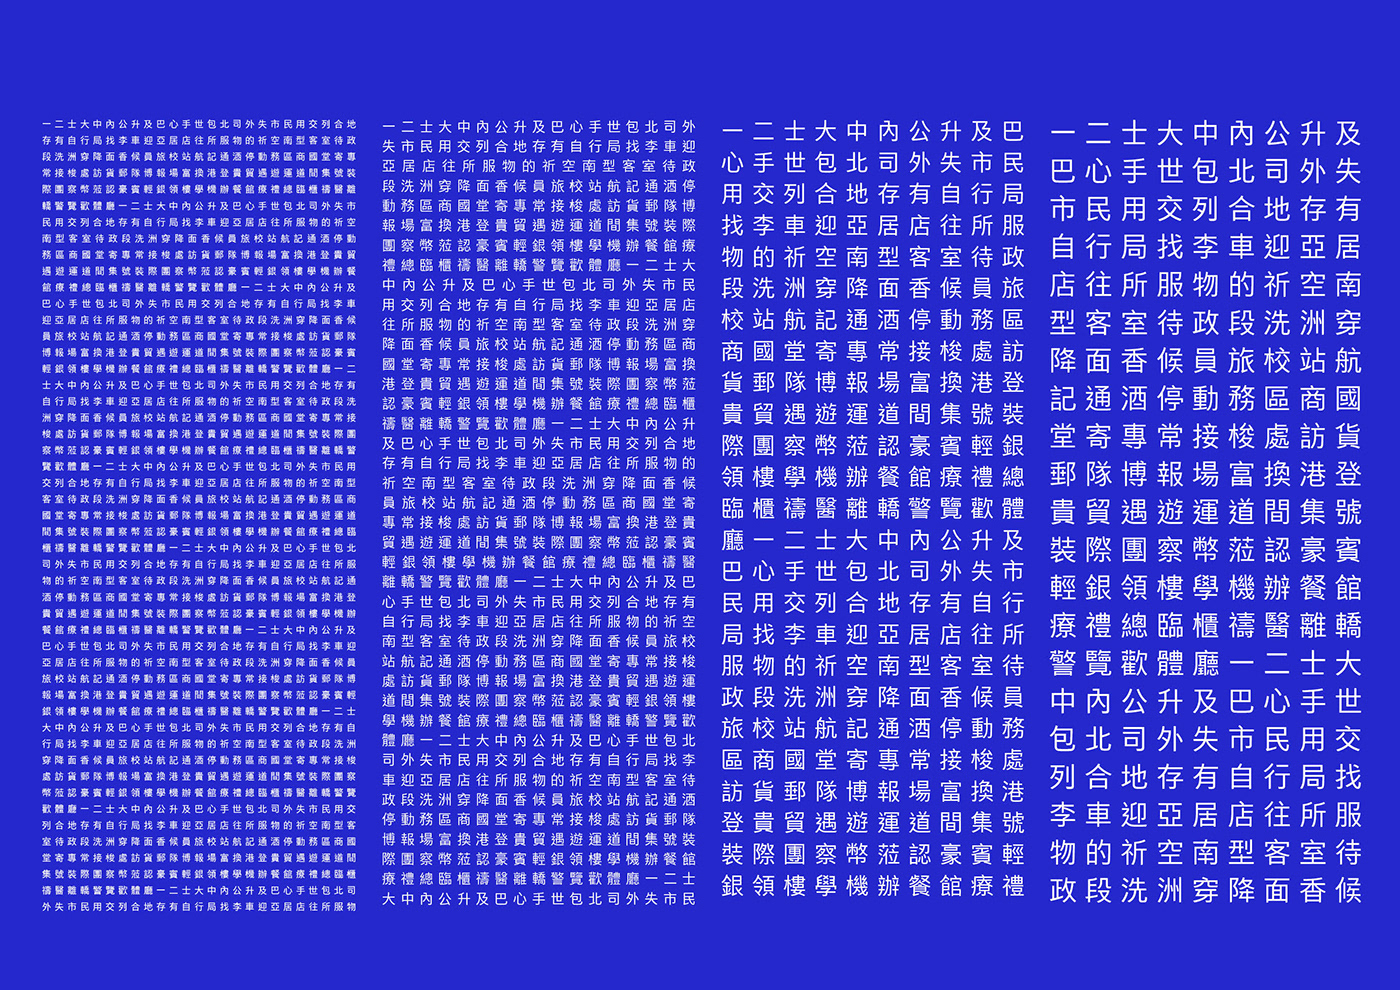 Typeface chinese typeface typography   airport Signage wayfinding type design sanserif Chinese typography glyphs